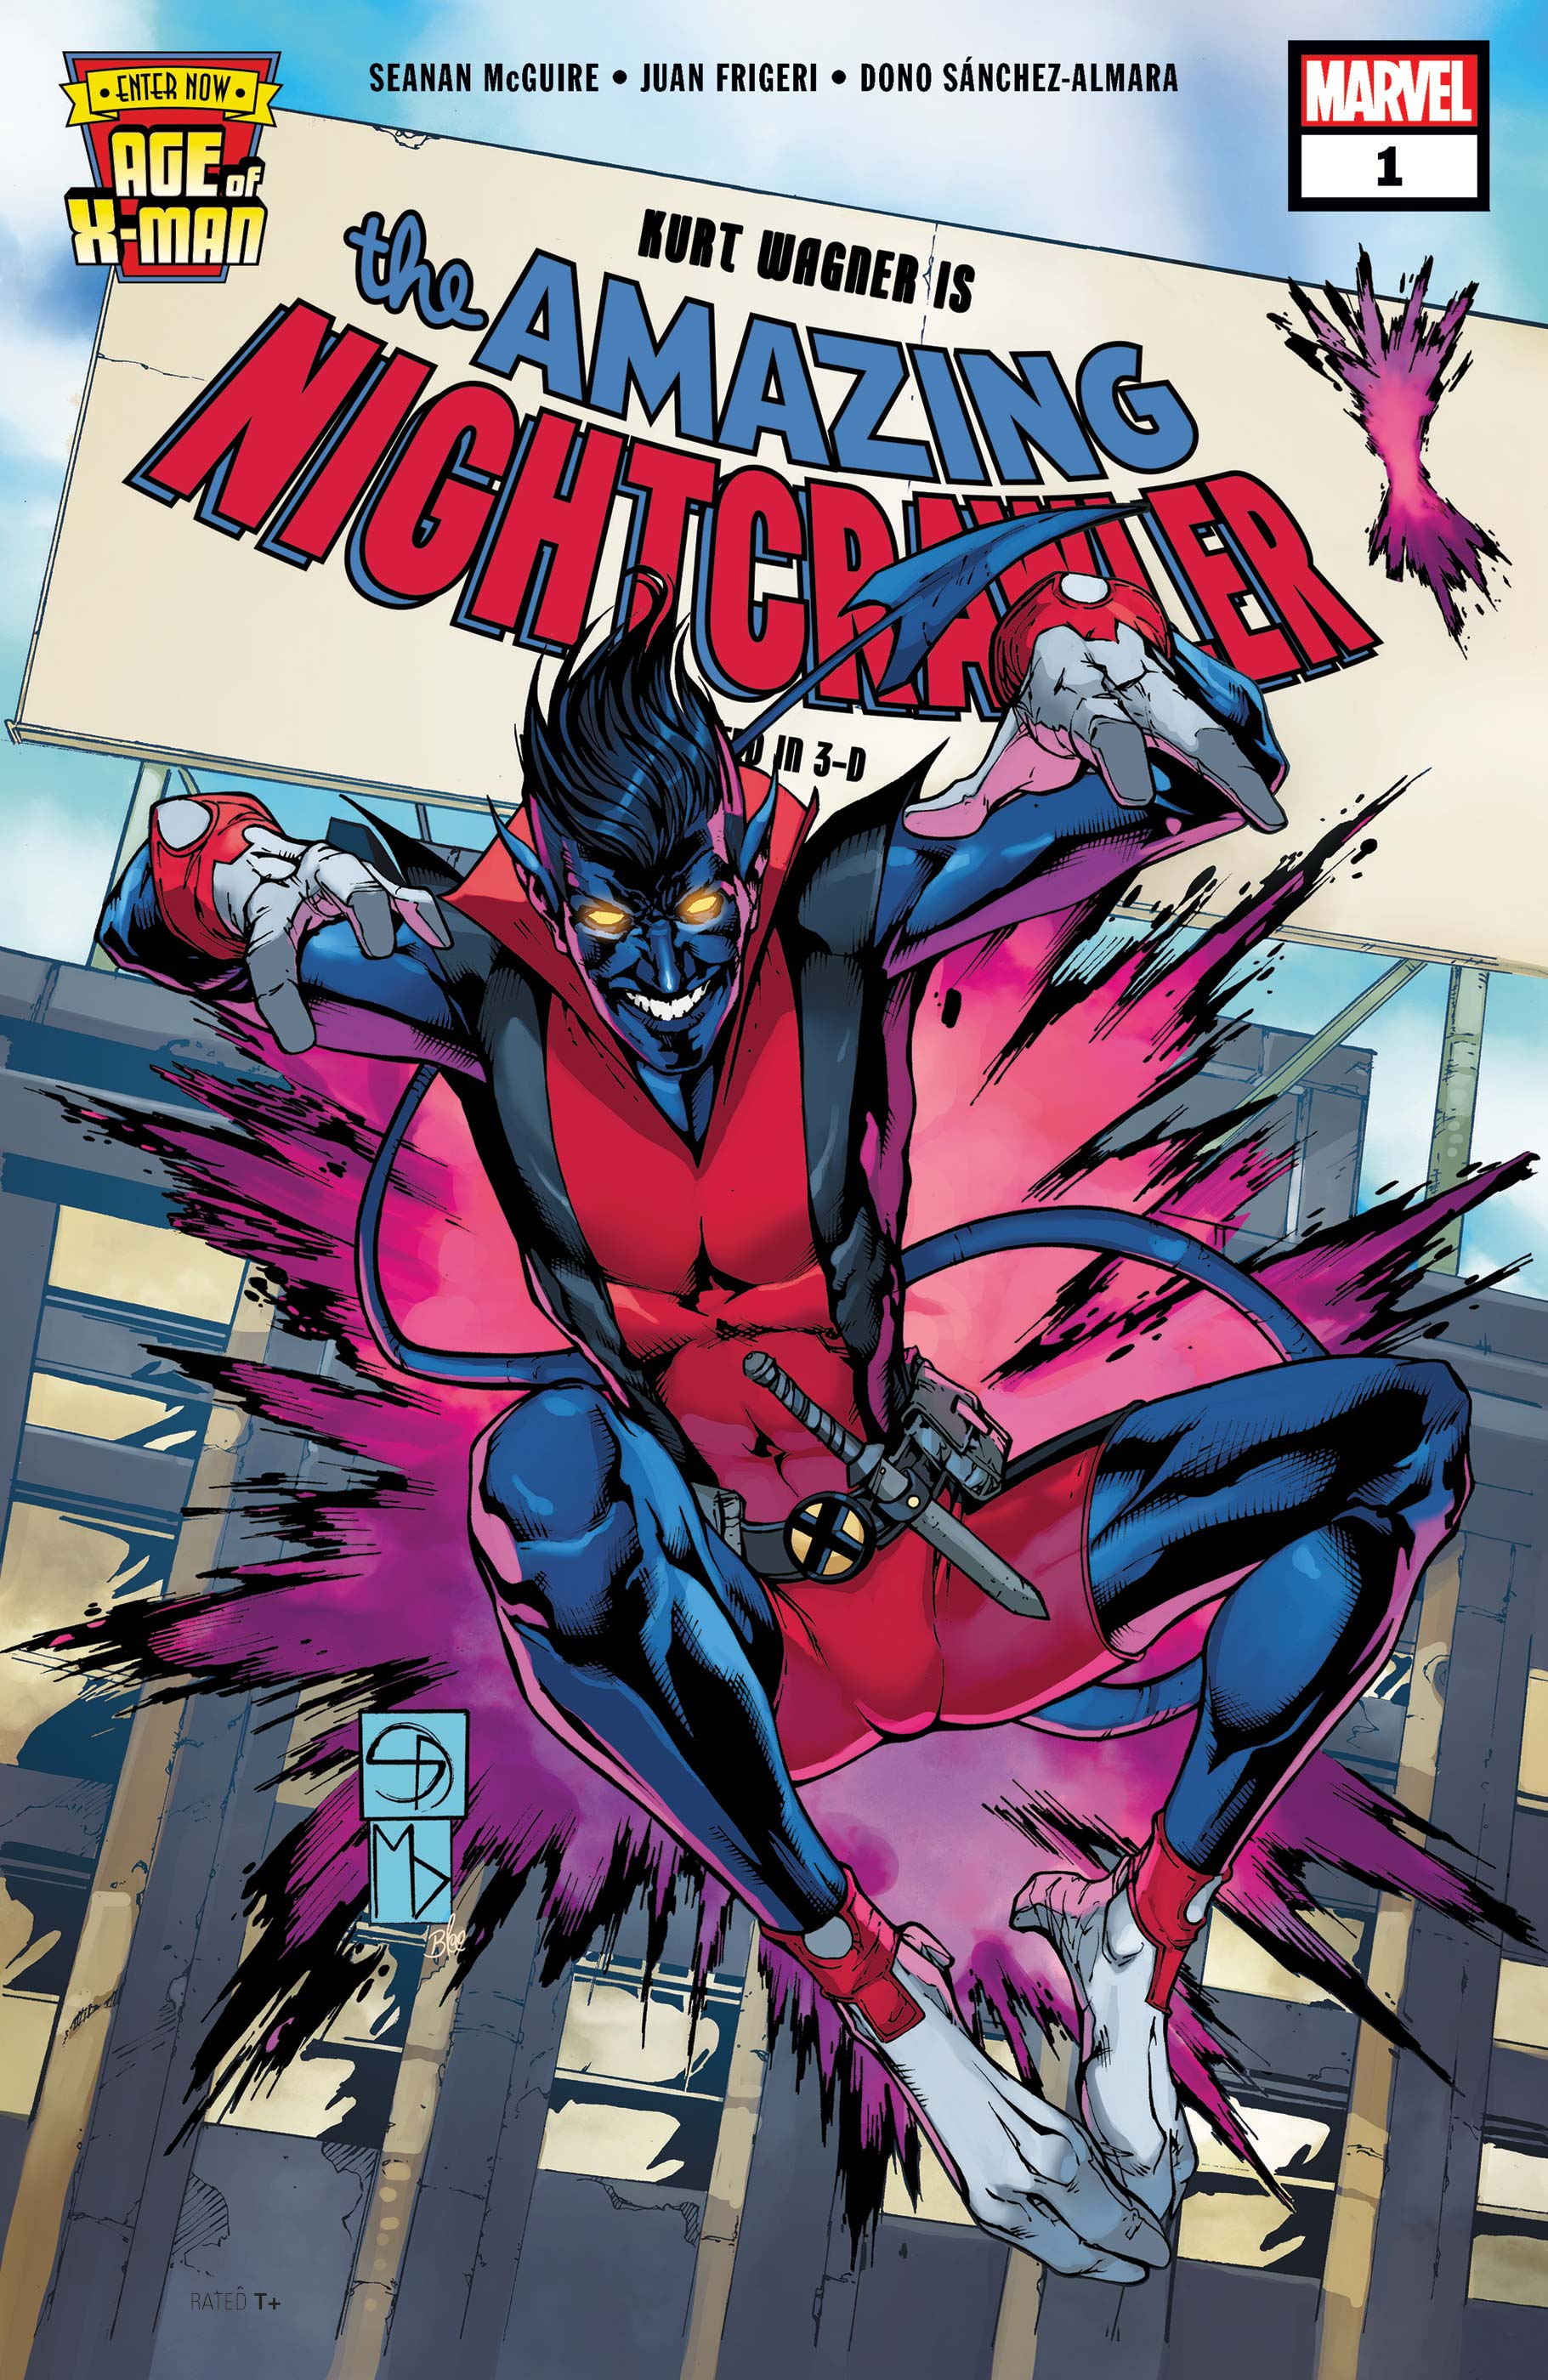 Age of X-Man: The Amazing Nightcrawler (2019) #1